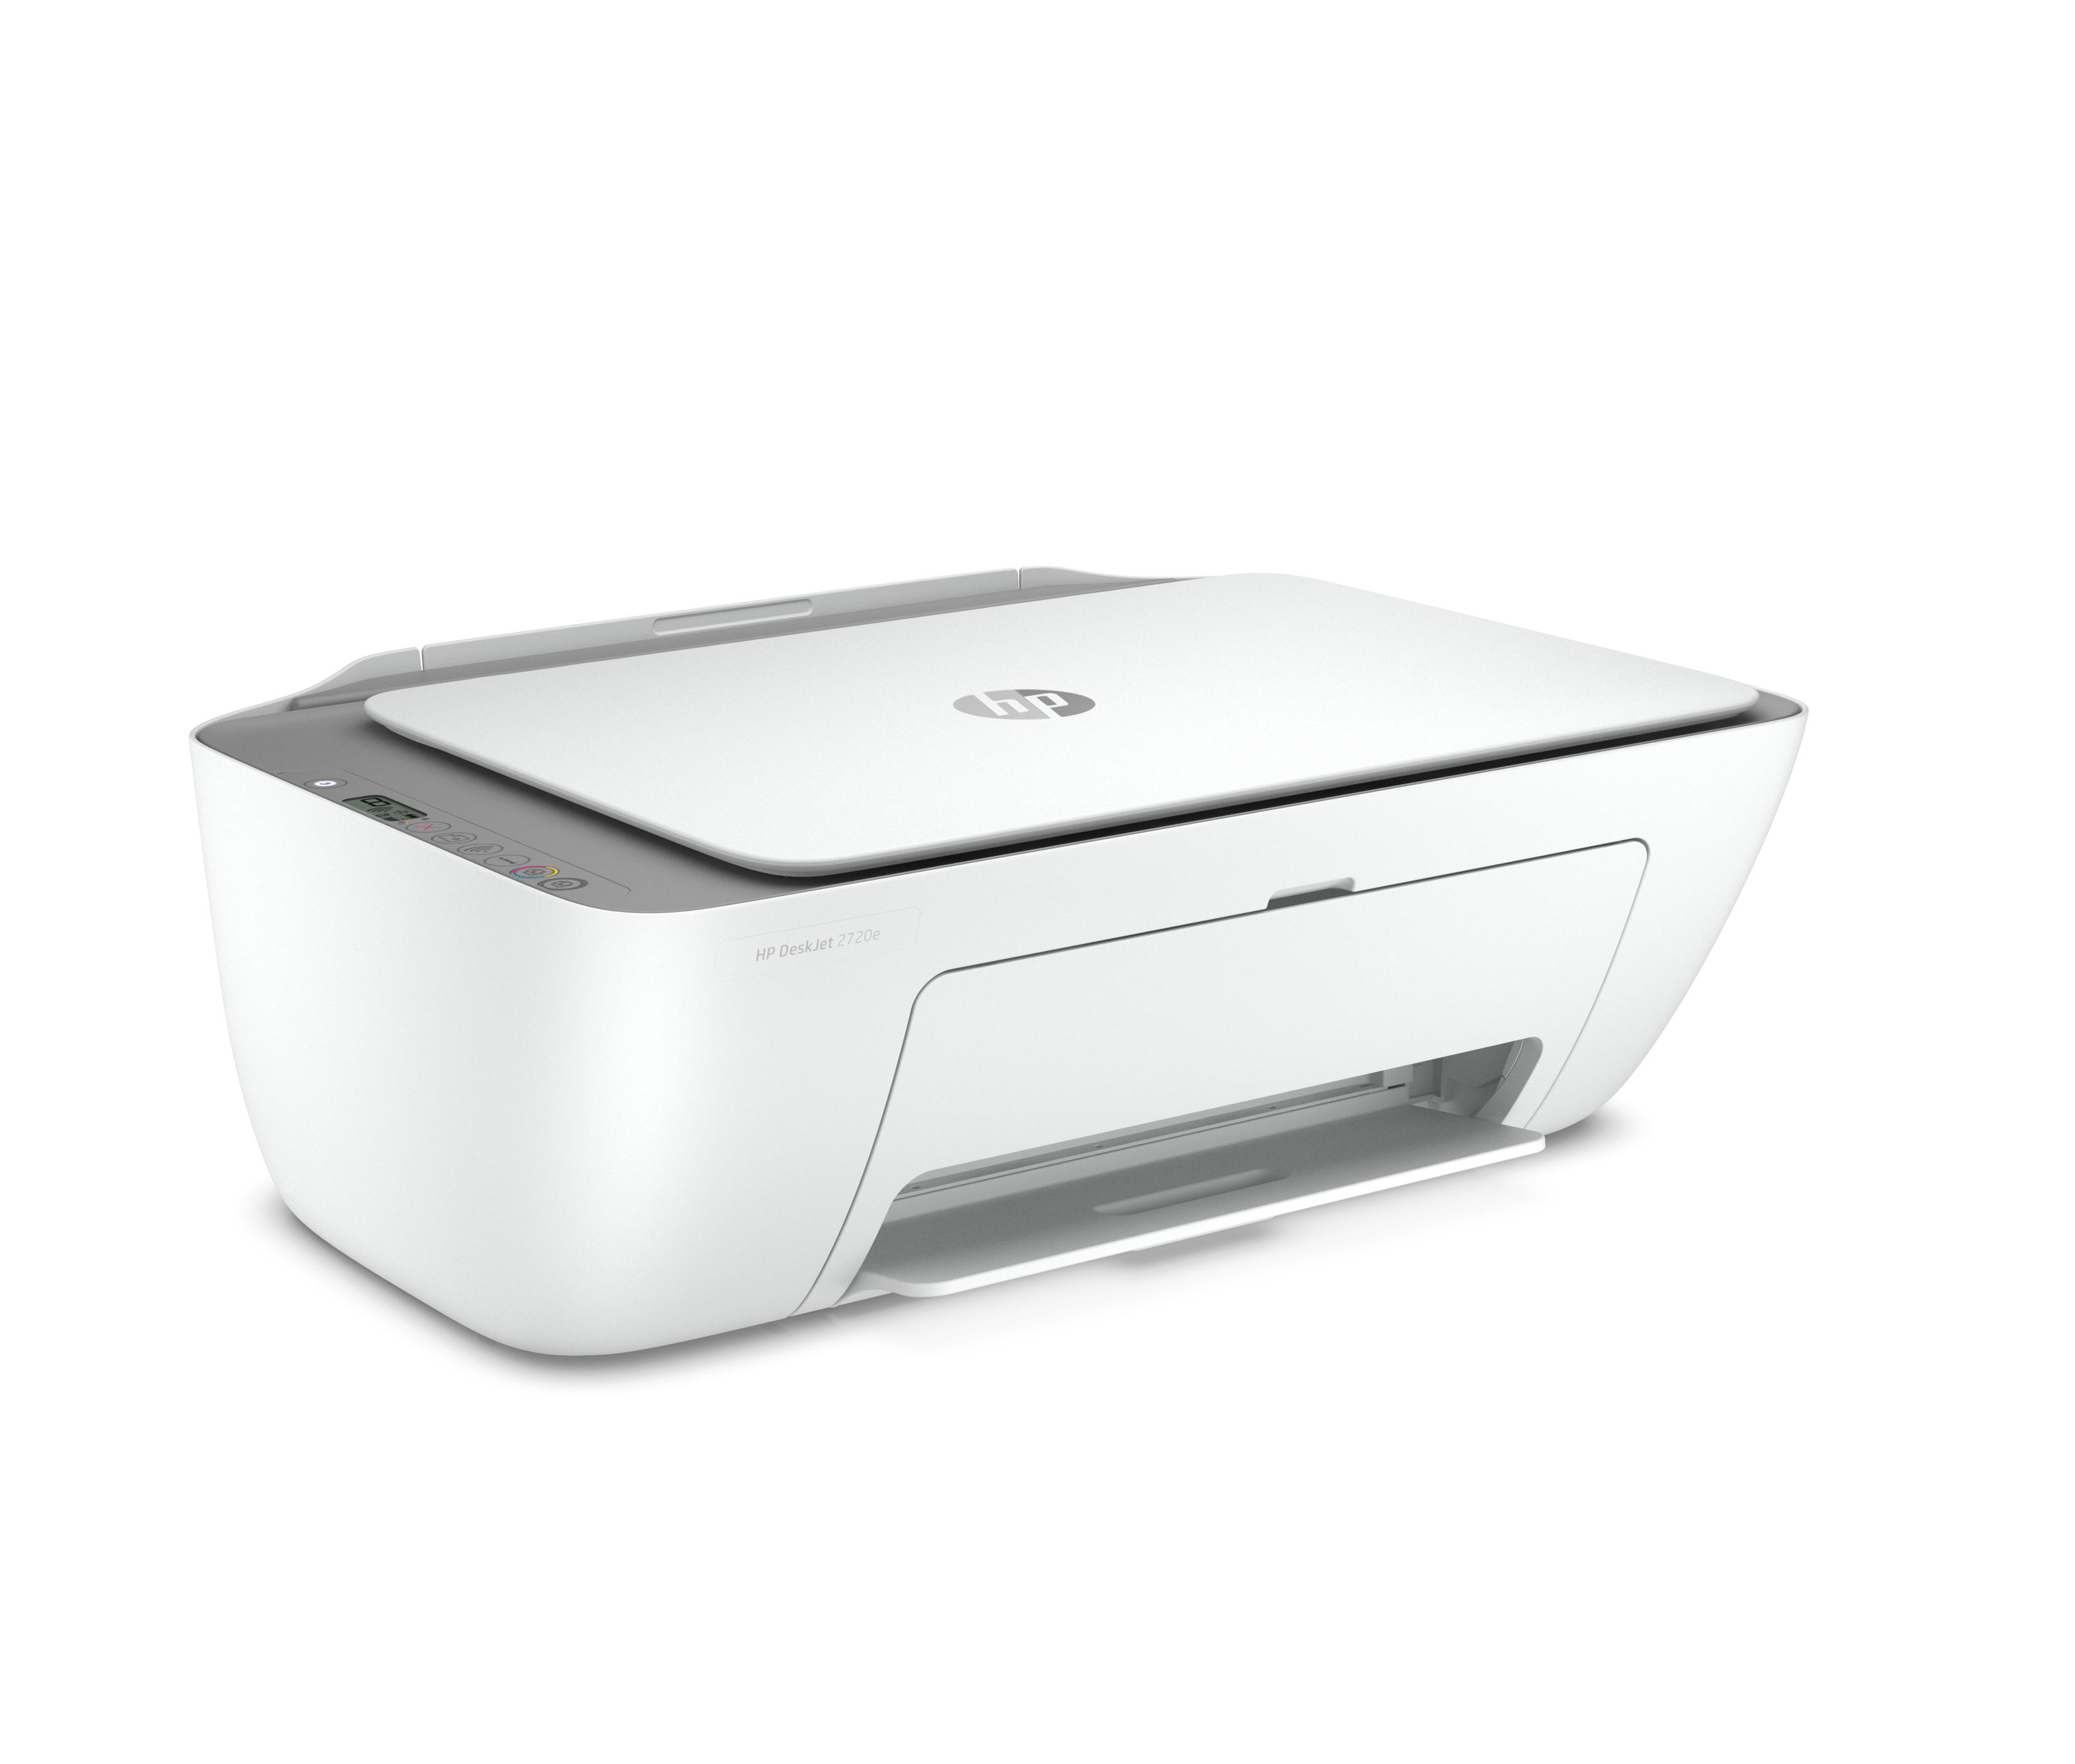 (Instant DeskJet Ink) Thermal Inkjet 2720e WLAN Multifunktionsdrucker HP